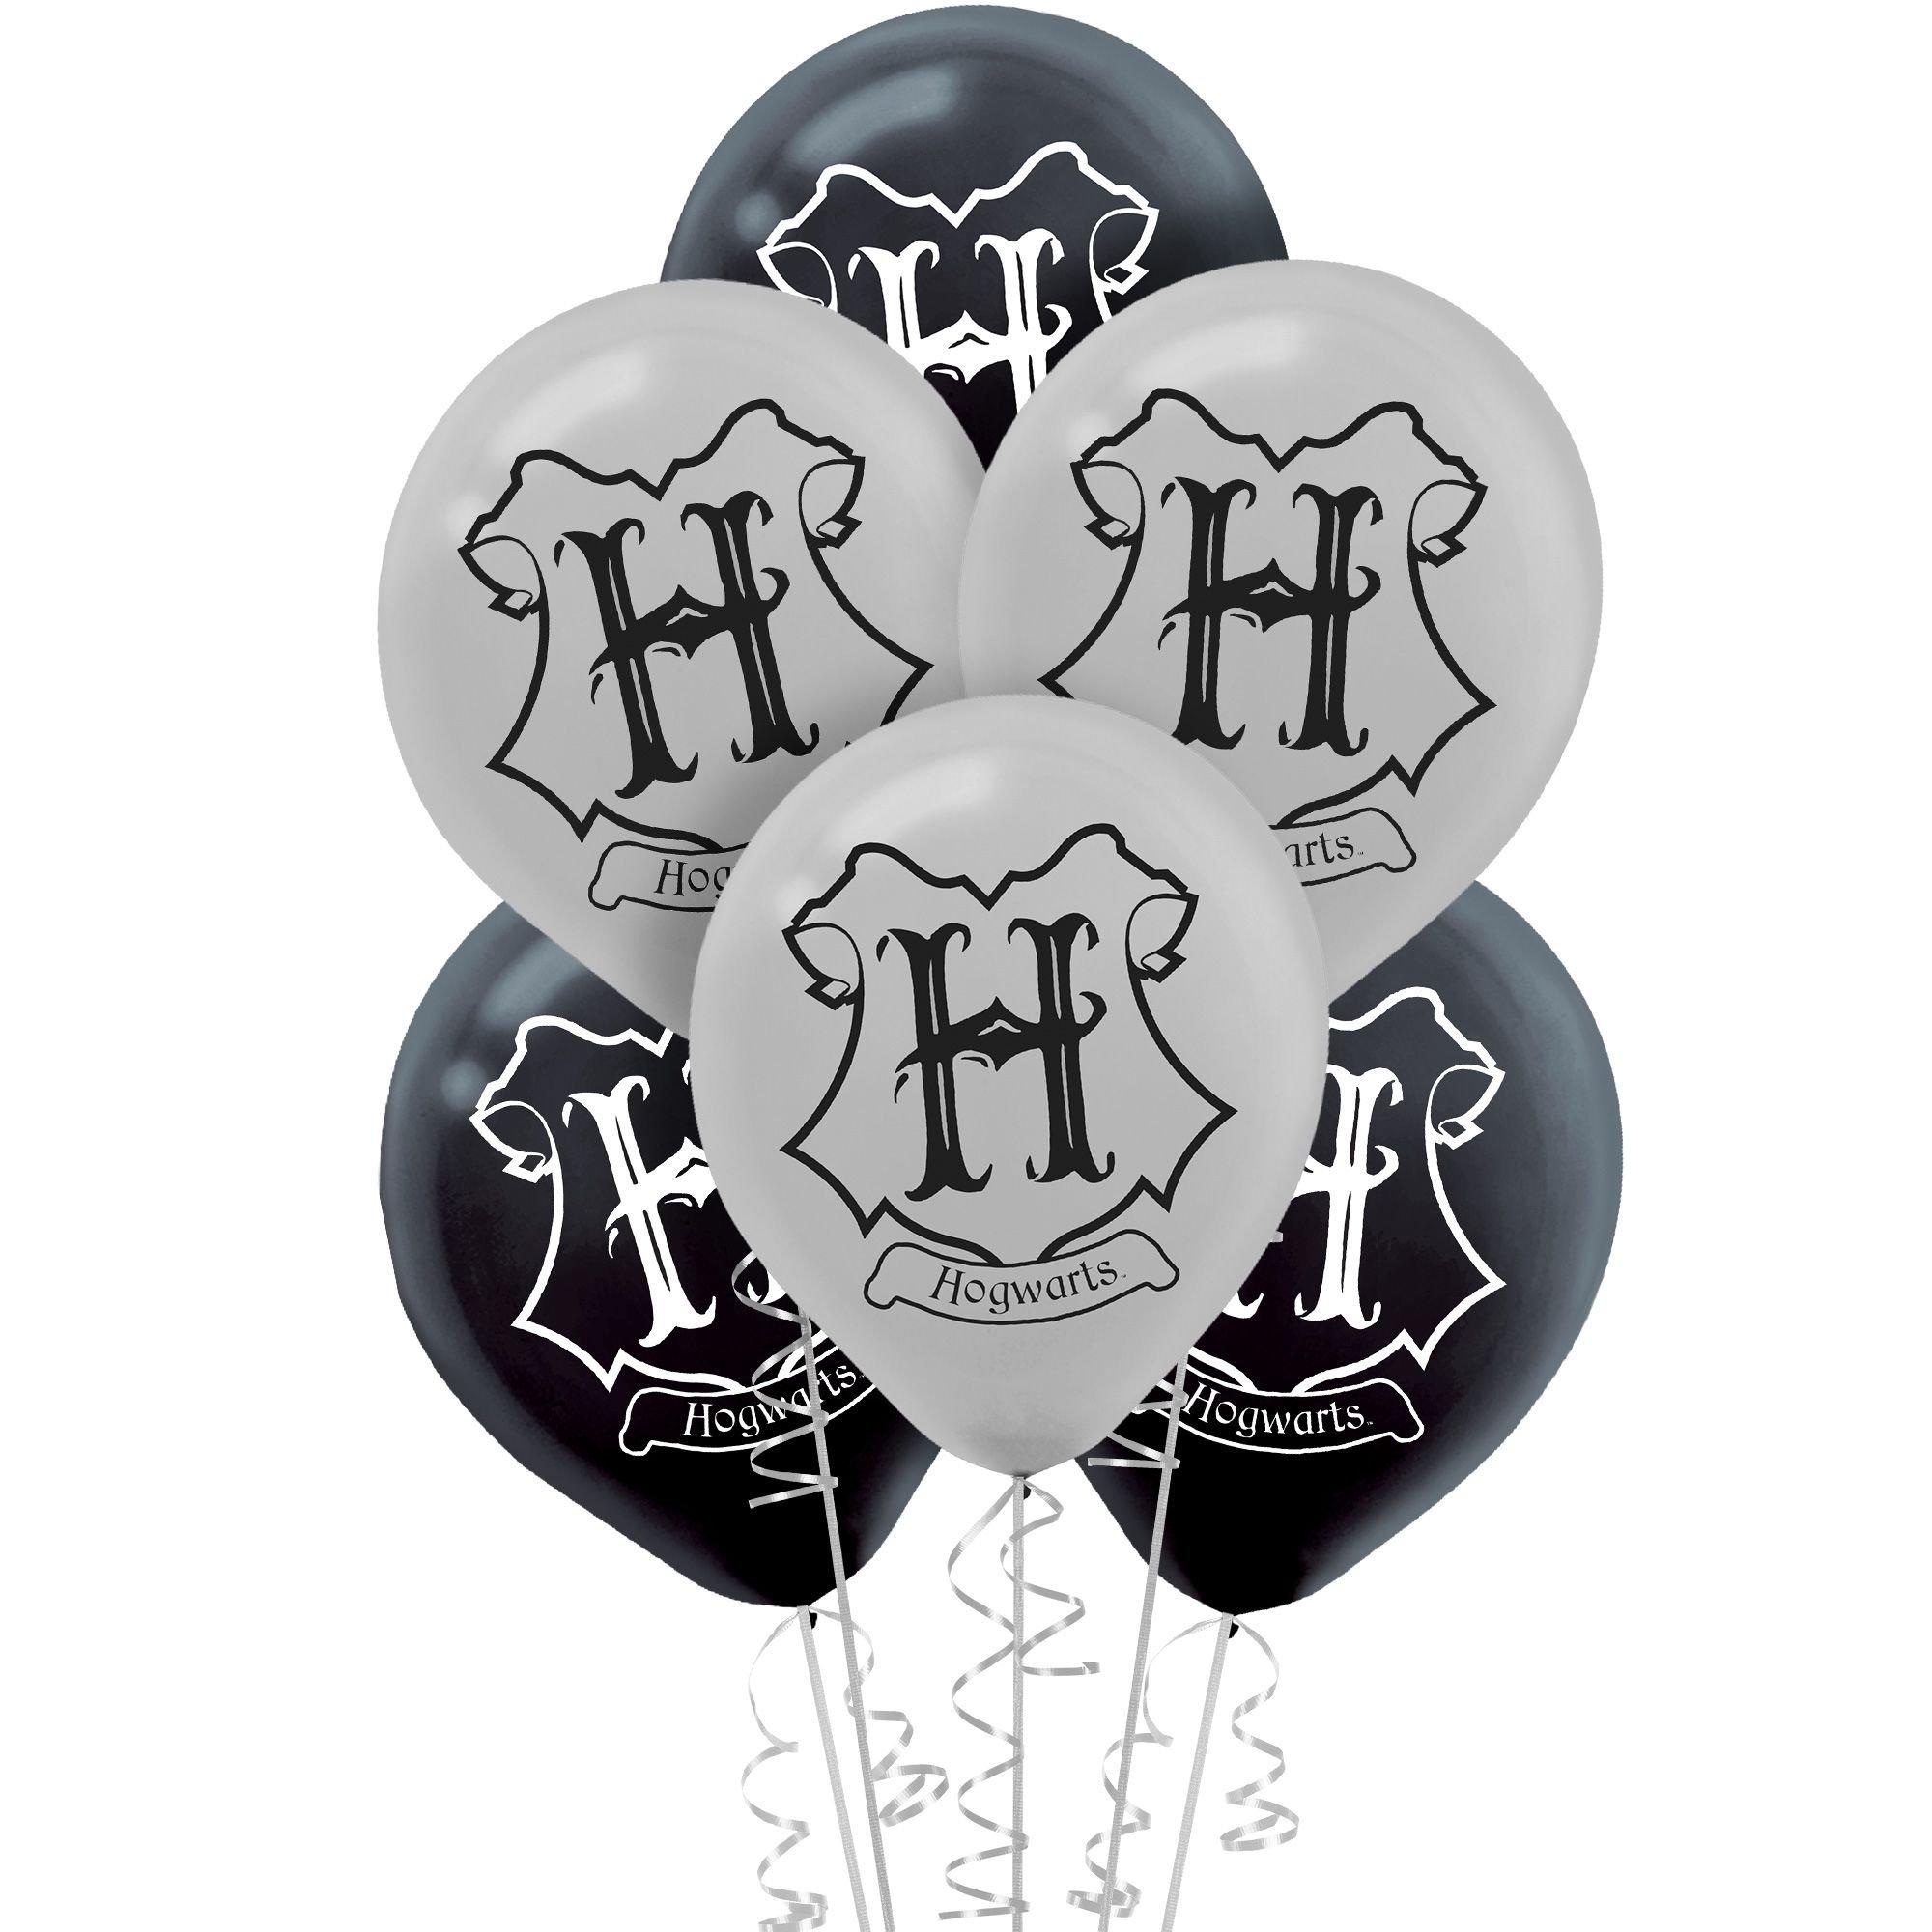 New Harry Potter Birthday Party Decoration Balloon Backdrop